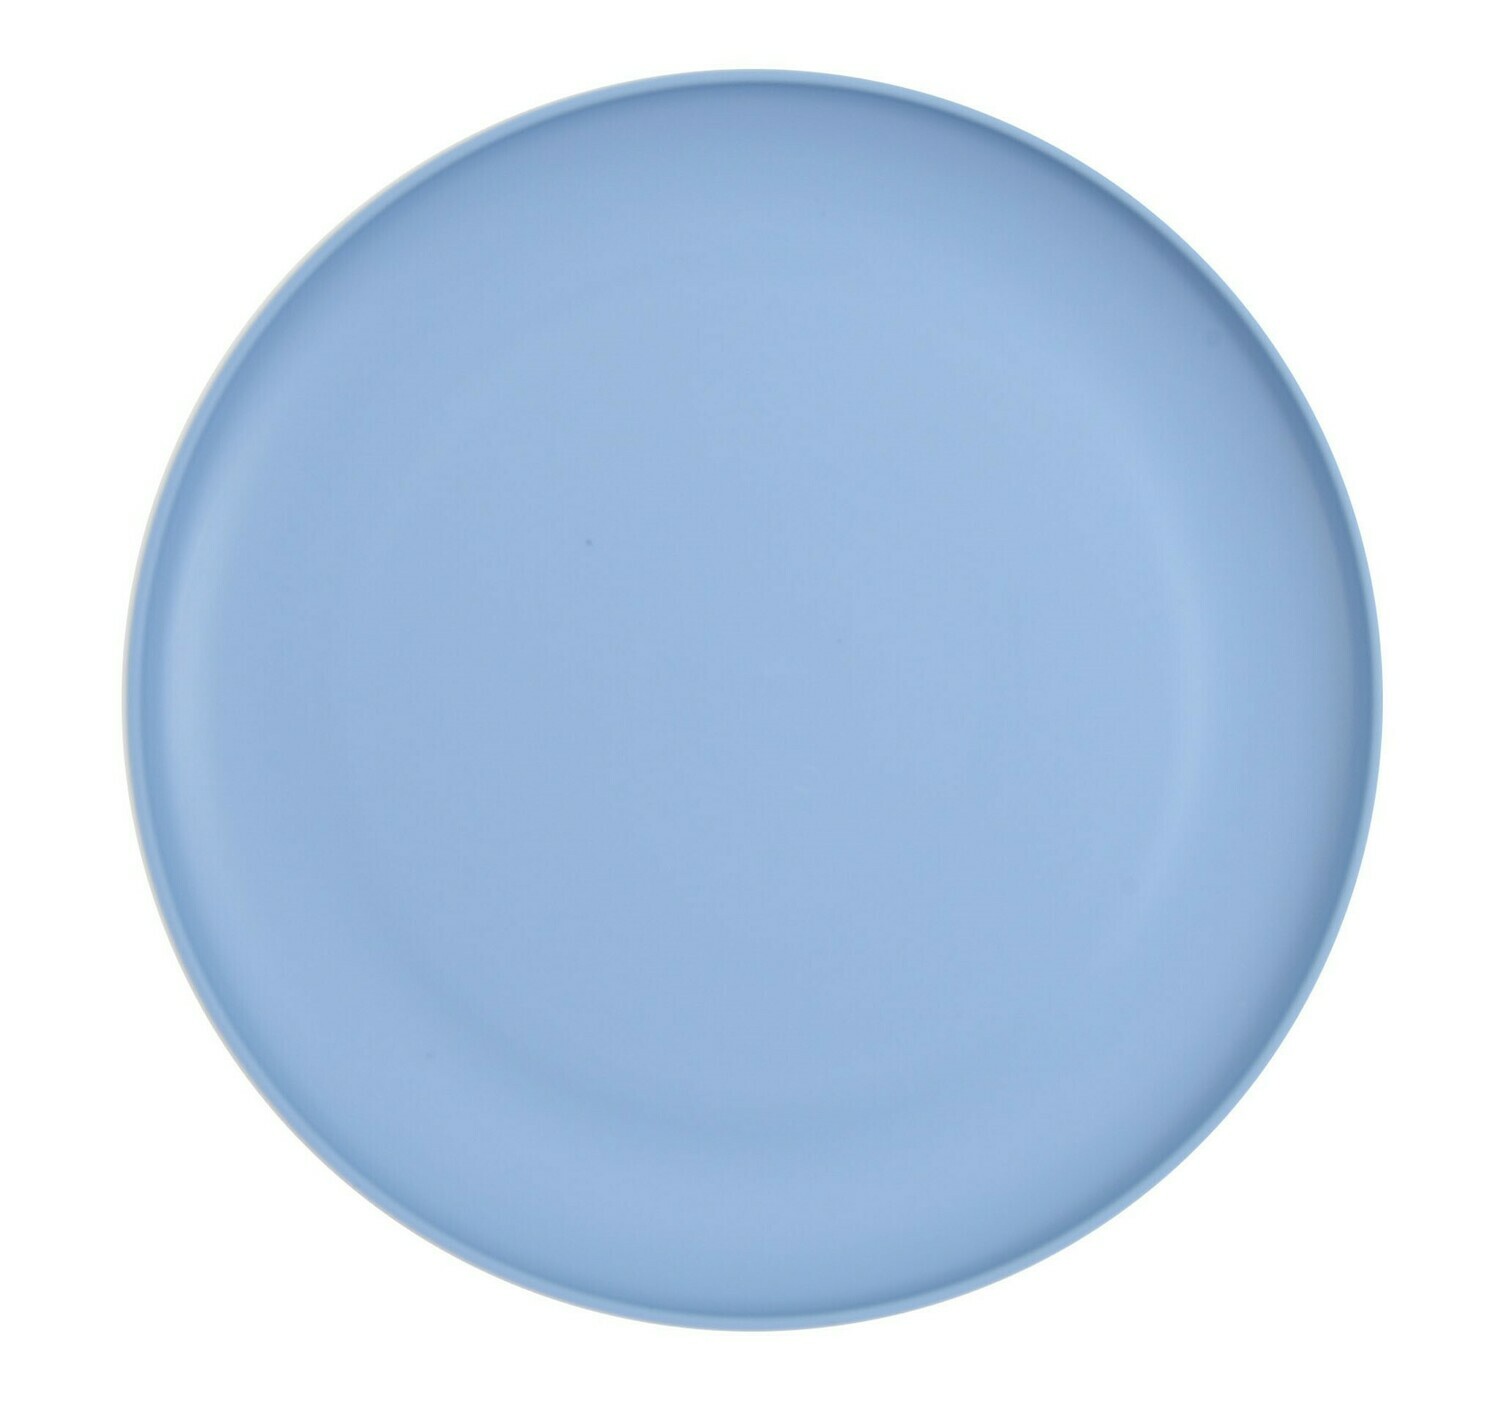 Mainstay 10.5" blue plastic microwavable plate